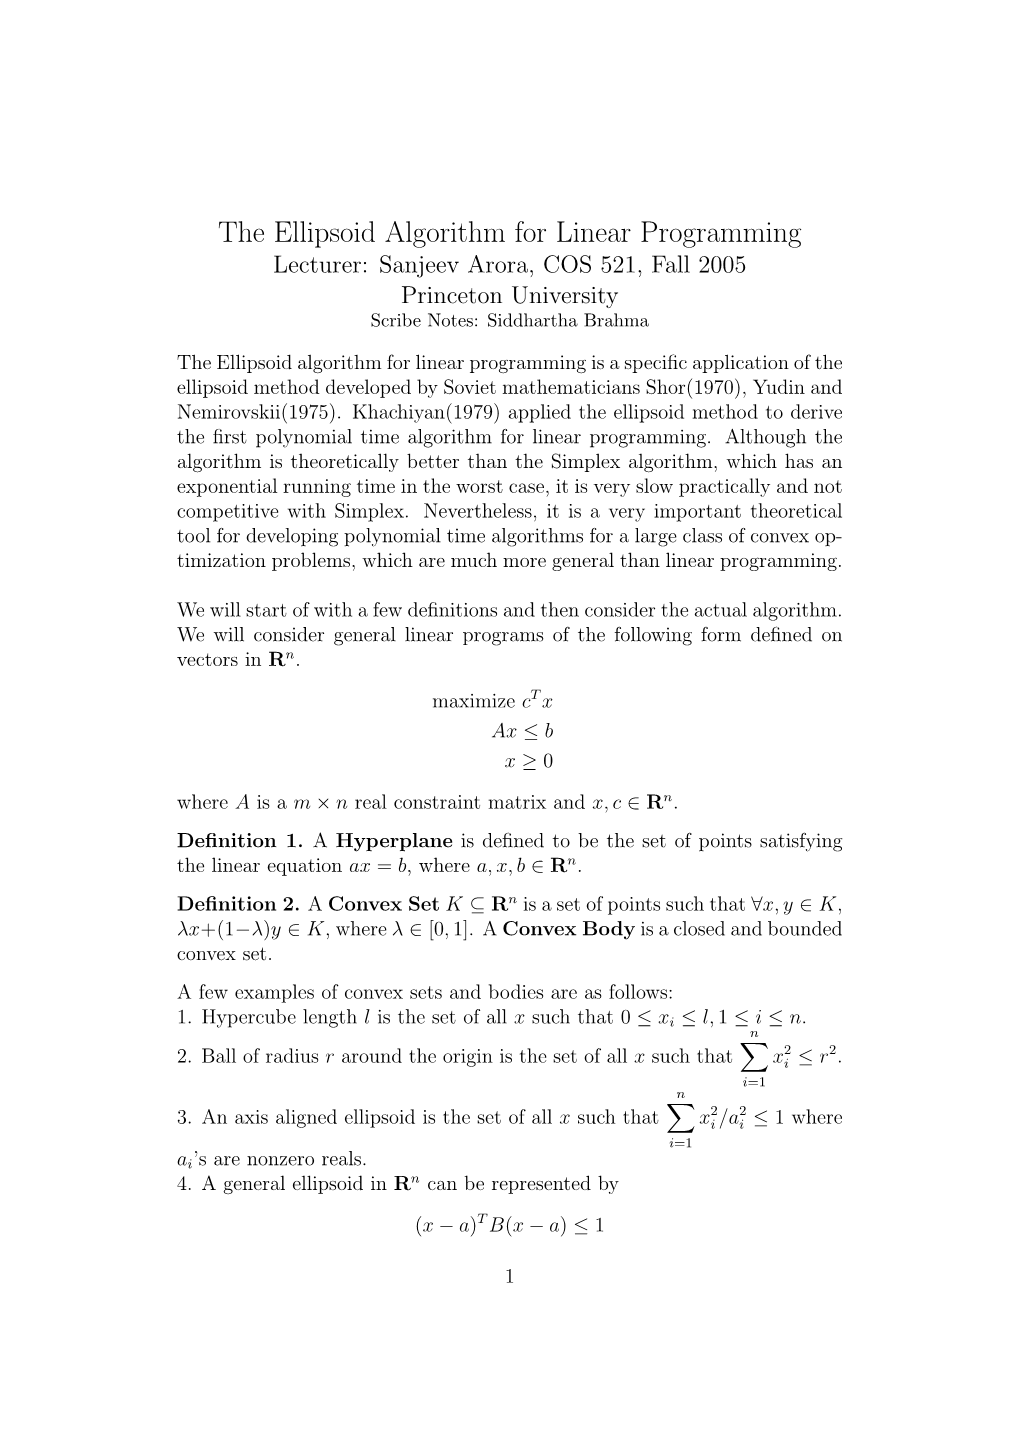 The Ellipsoid Algorithm for Linear Programming Lecturer: Sanjeev Arora, COS 521, Fall 2005 Princeton University Scribe Notes: Siddhartha Brahma